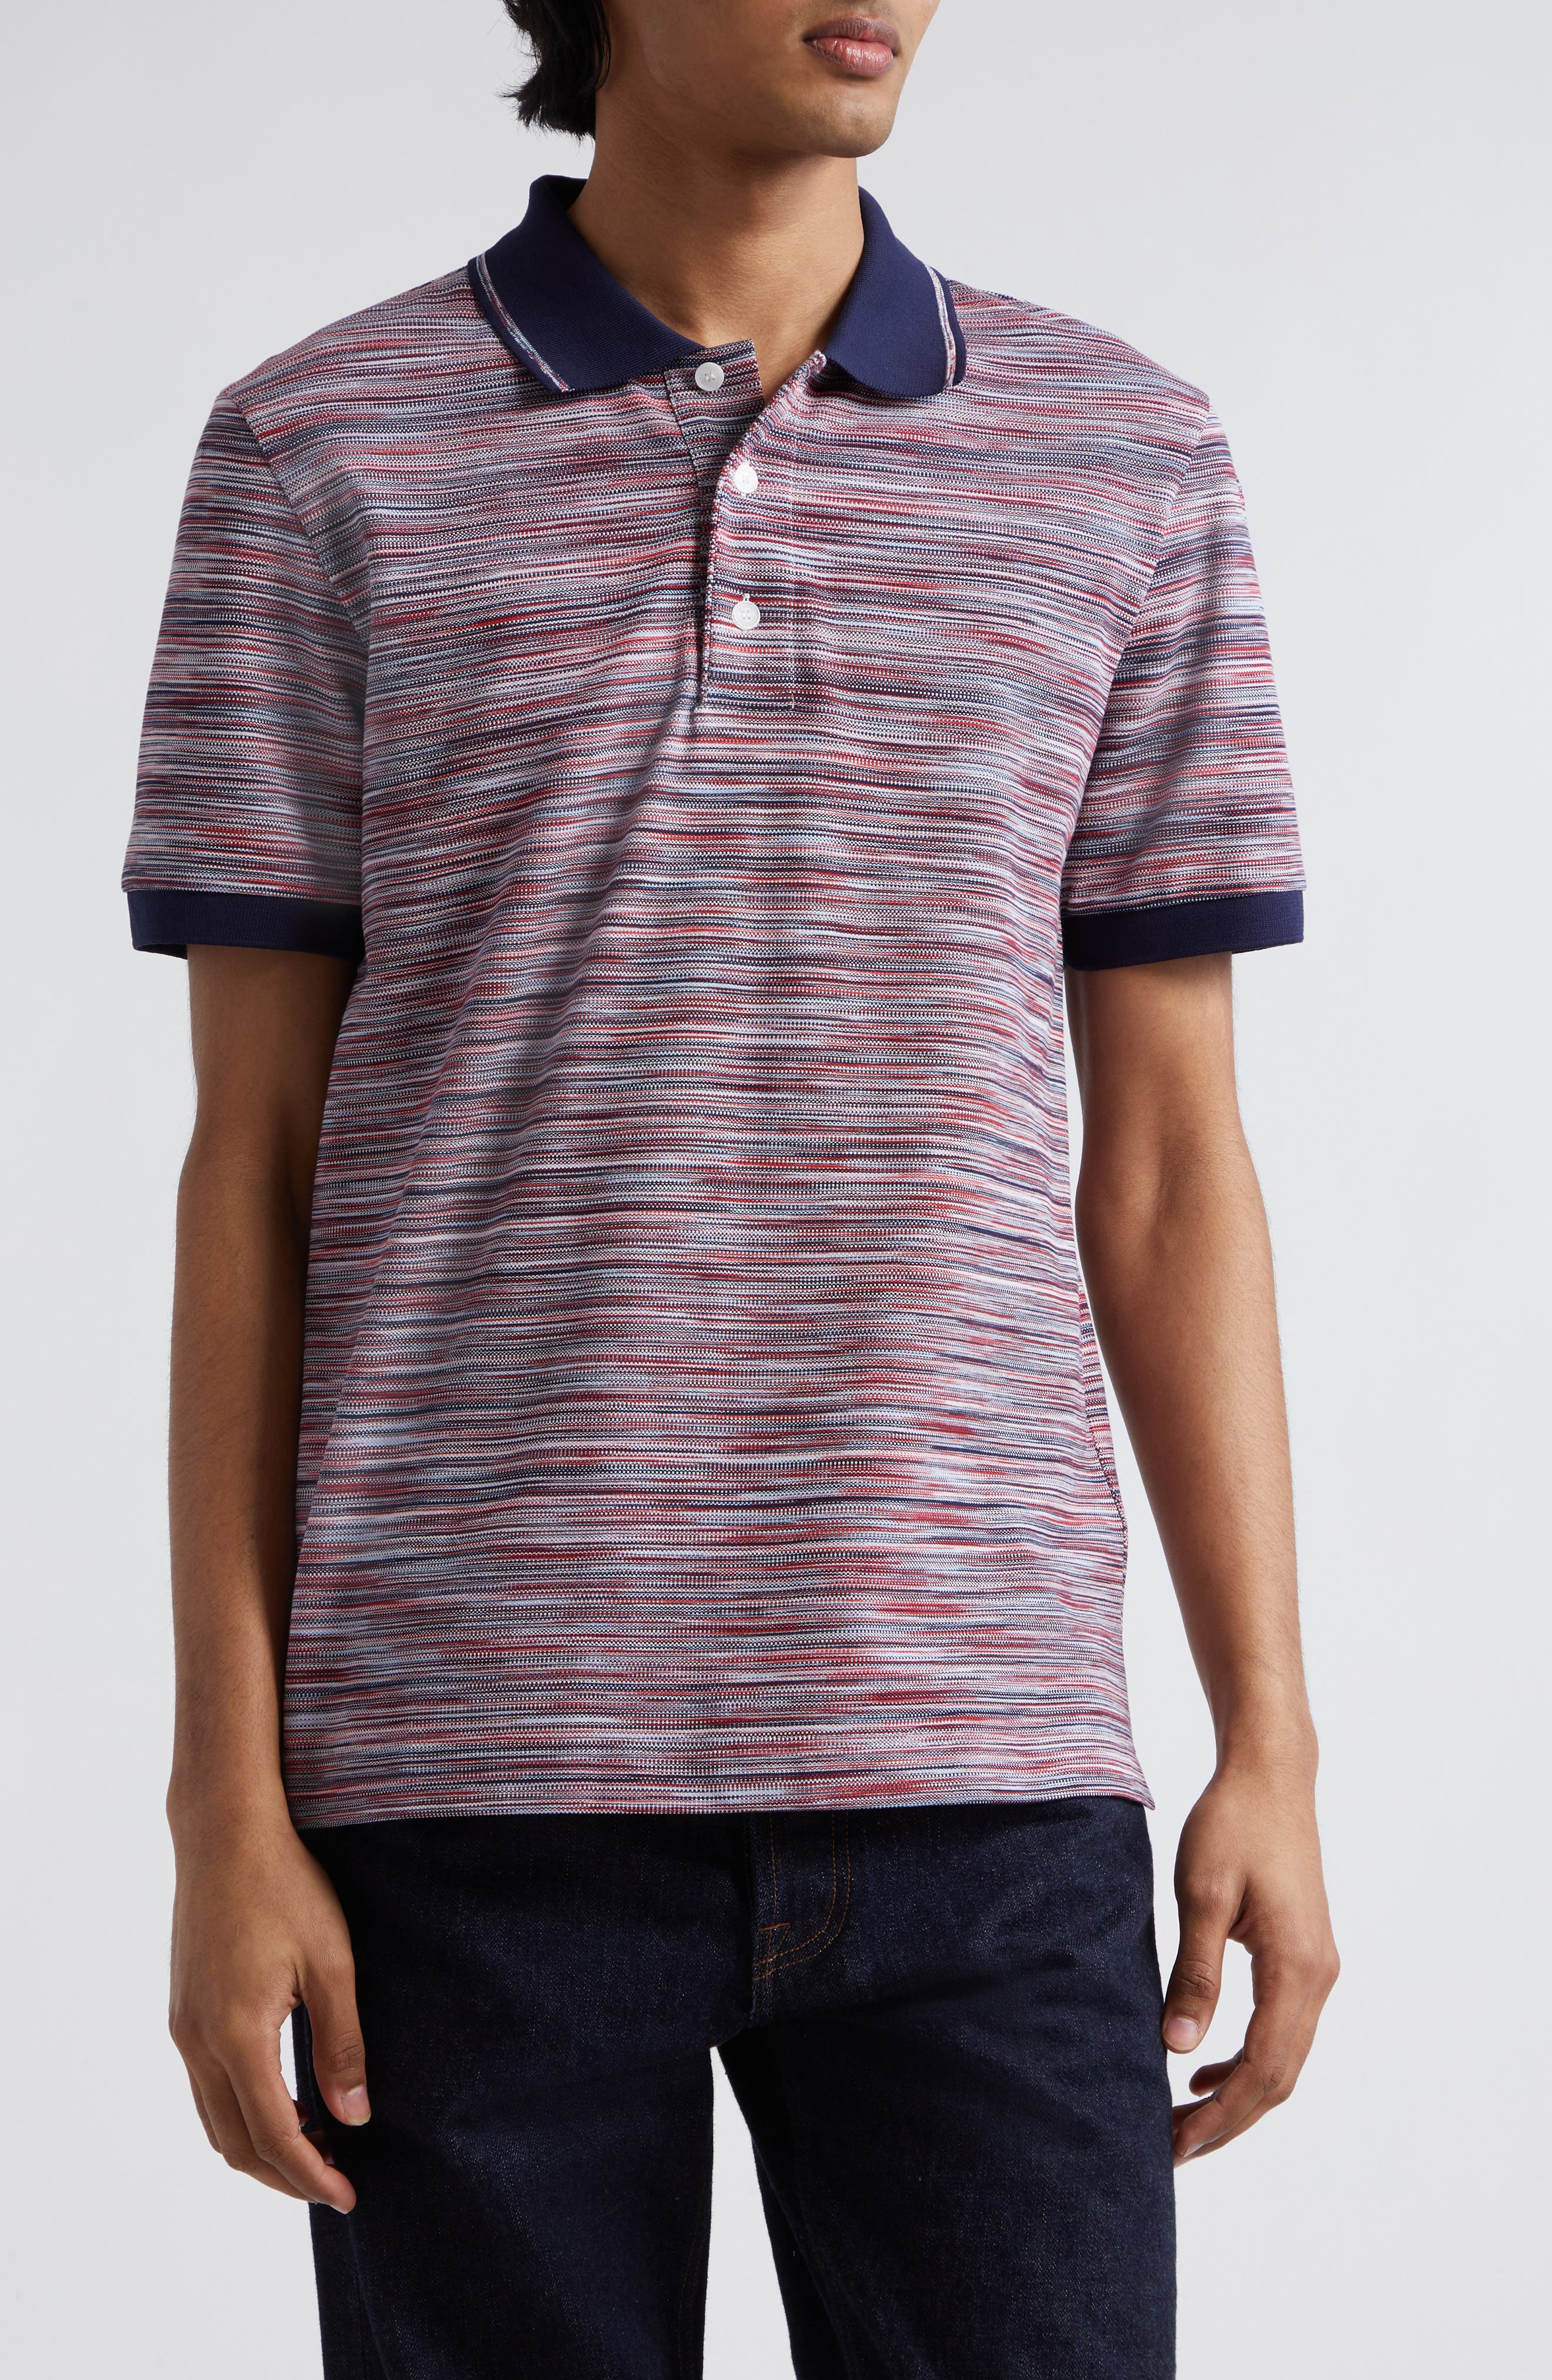 MISSONI BEACHWEAR - Signature Zigzag Short Sleeve Shirt